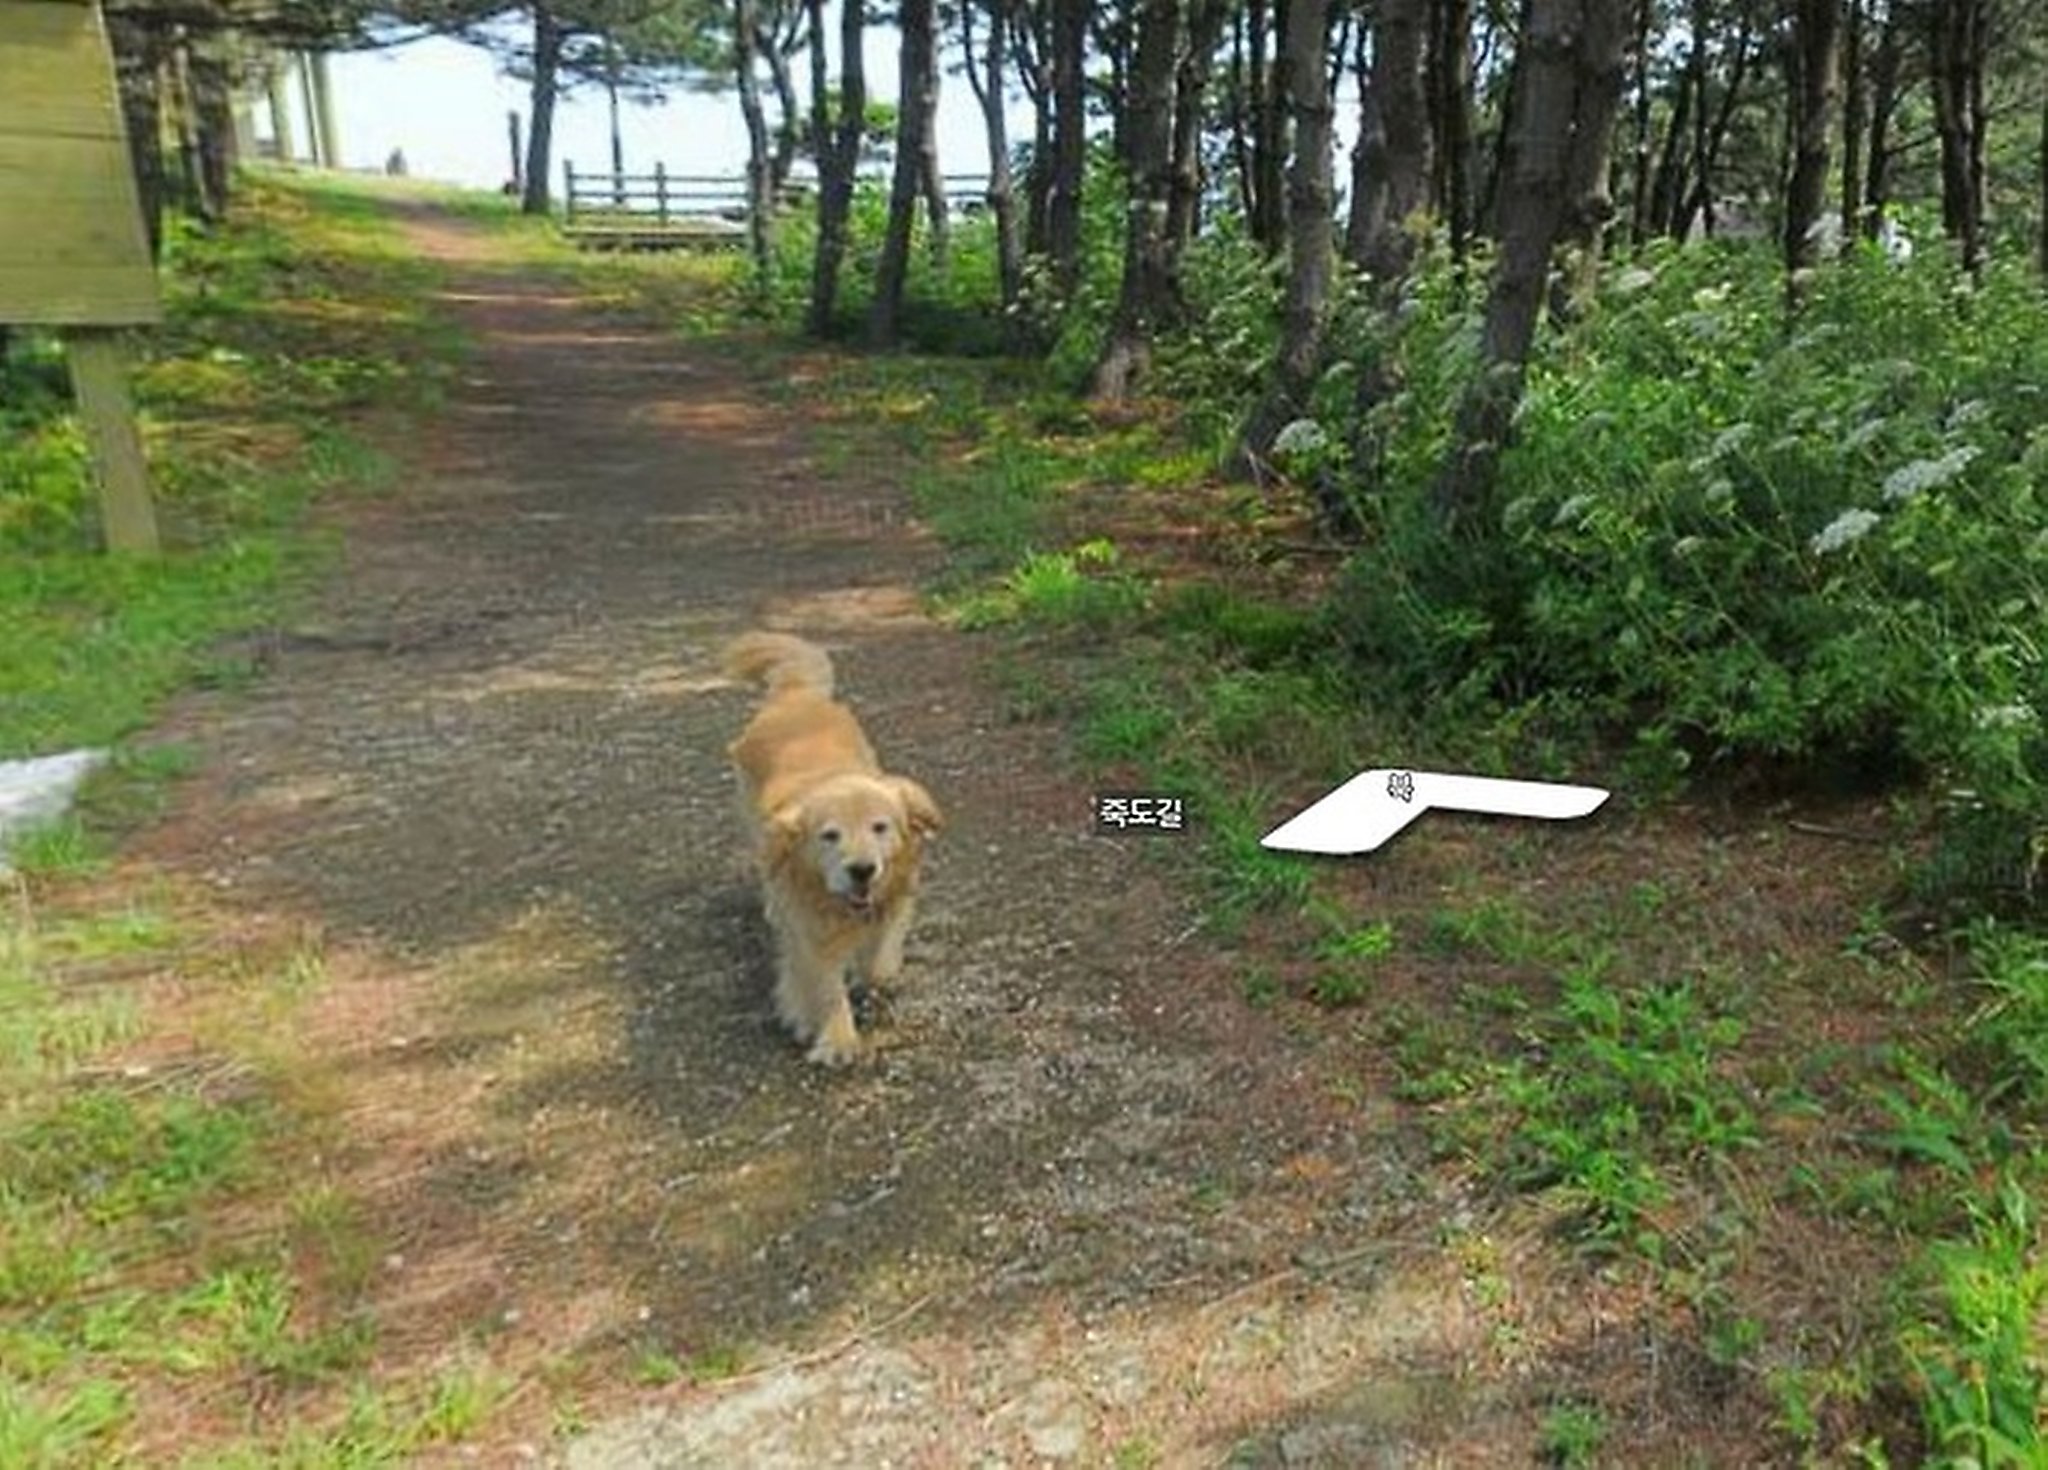 Friendly dog photobombs every Google street view of island - Houston Chronicle2048 x 1470